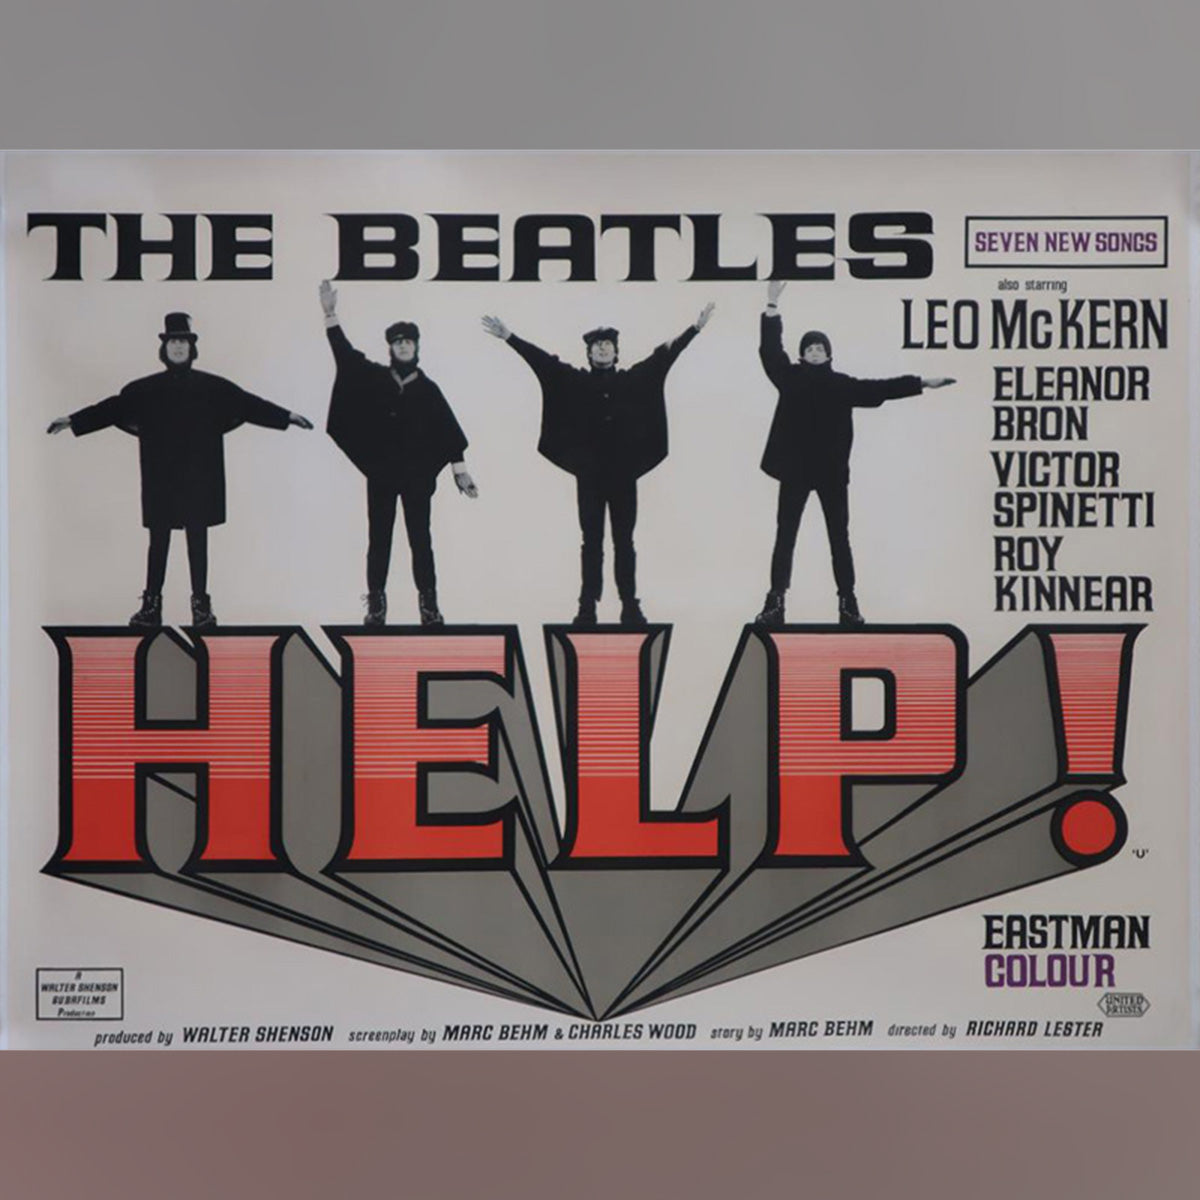 Original Movie Poster of Help! (1965)